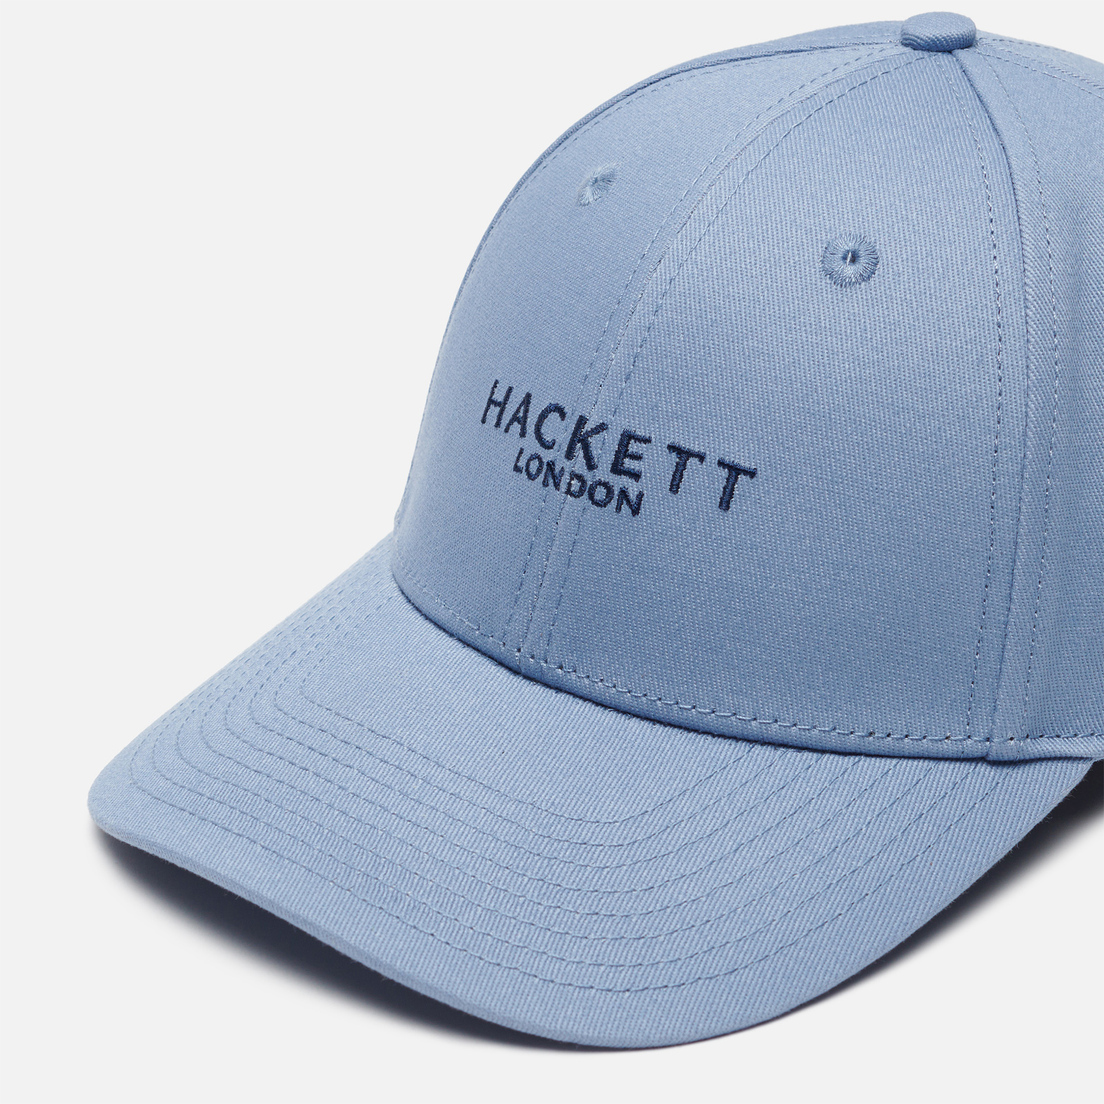 Hackett Кепка Classic Branding